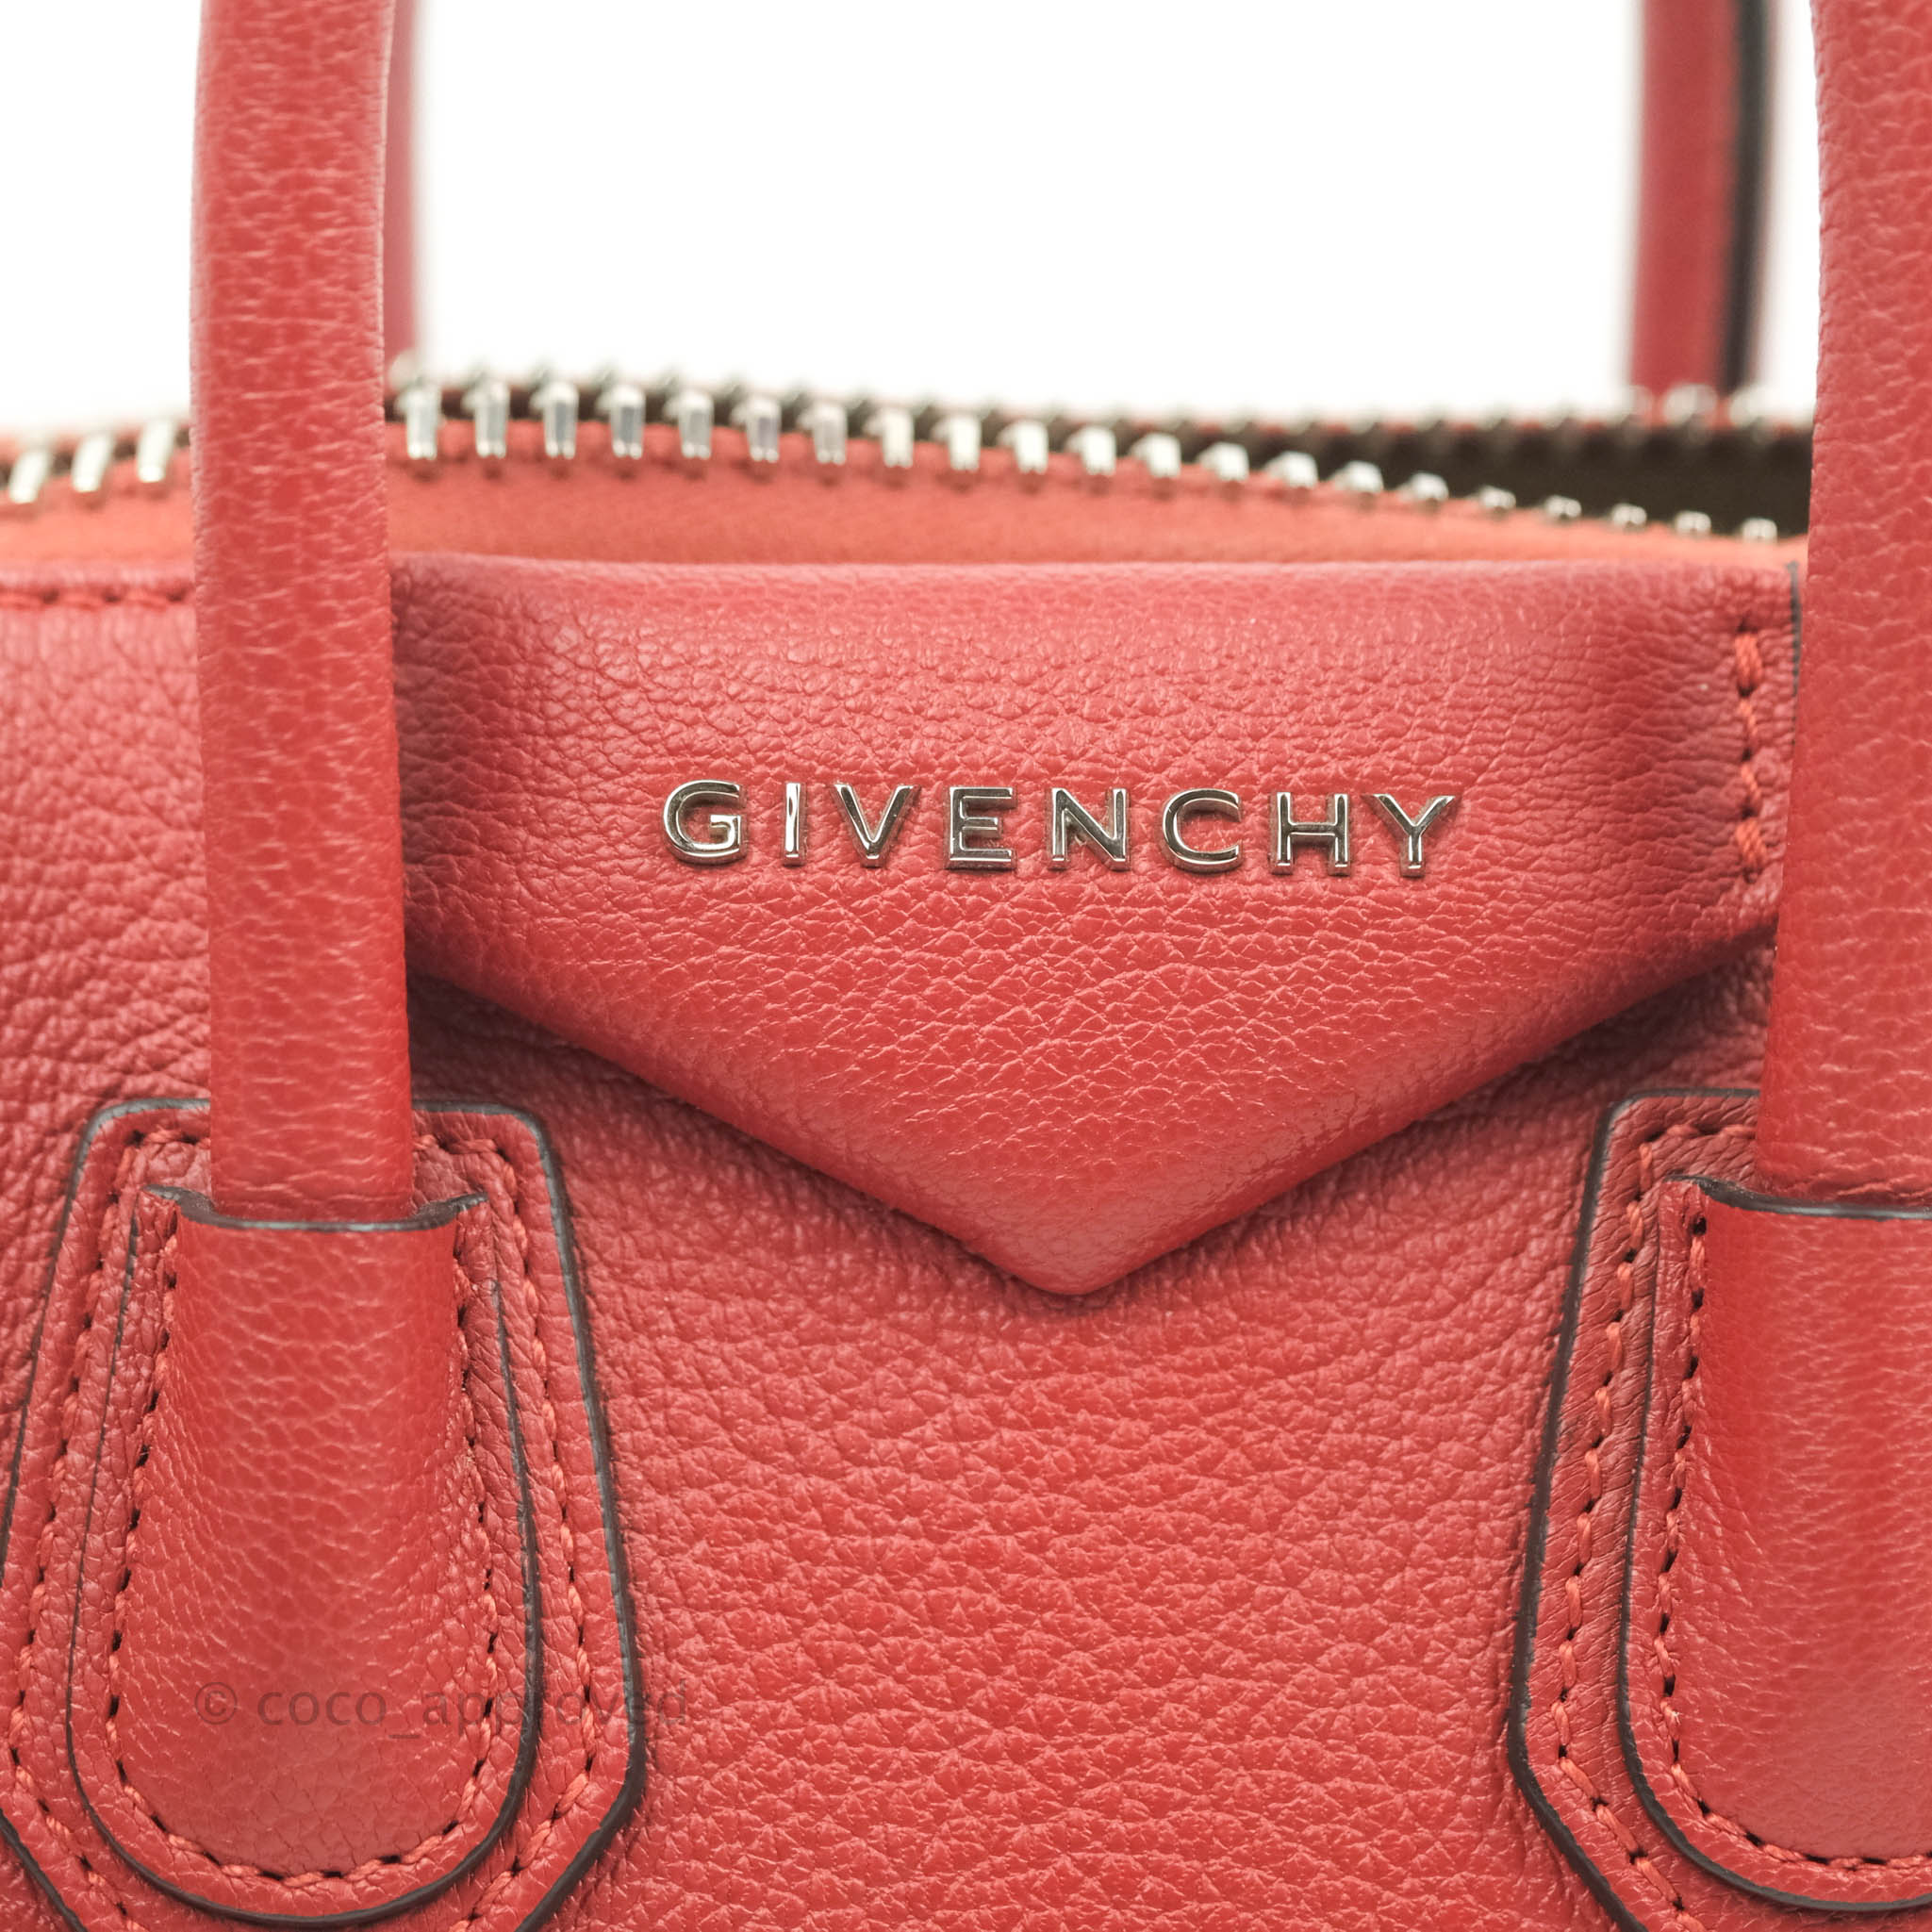 Givenchy Antigona Mini Red Grained Calfskin Silver Hardware – Coco Approved  Studio